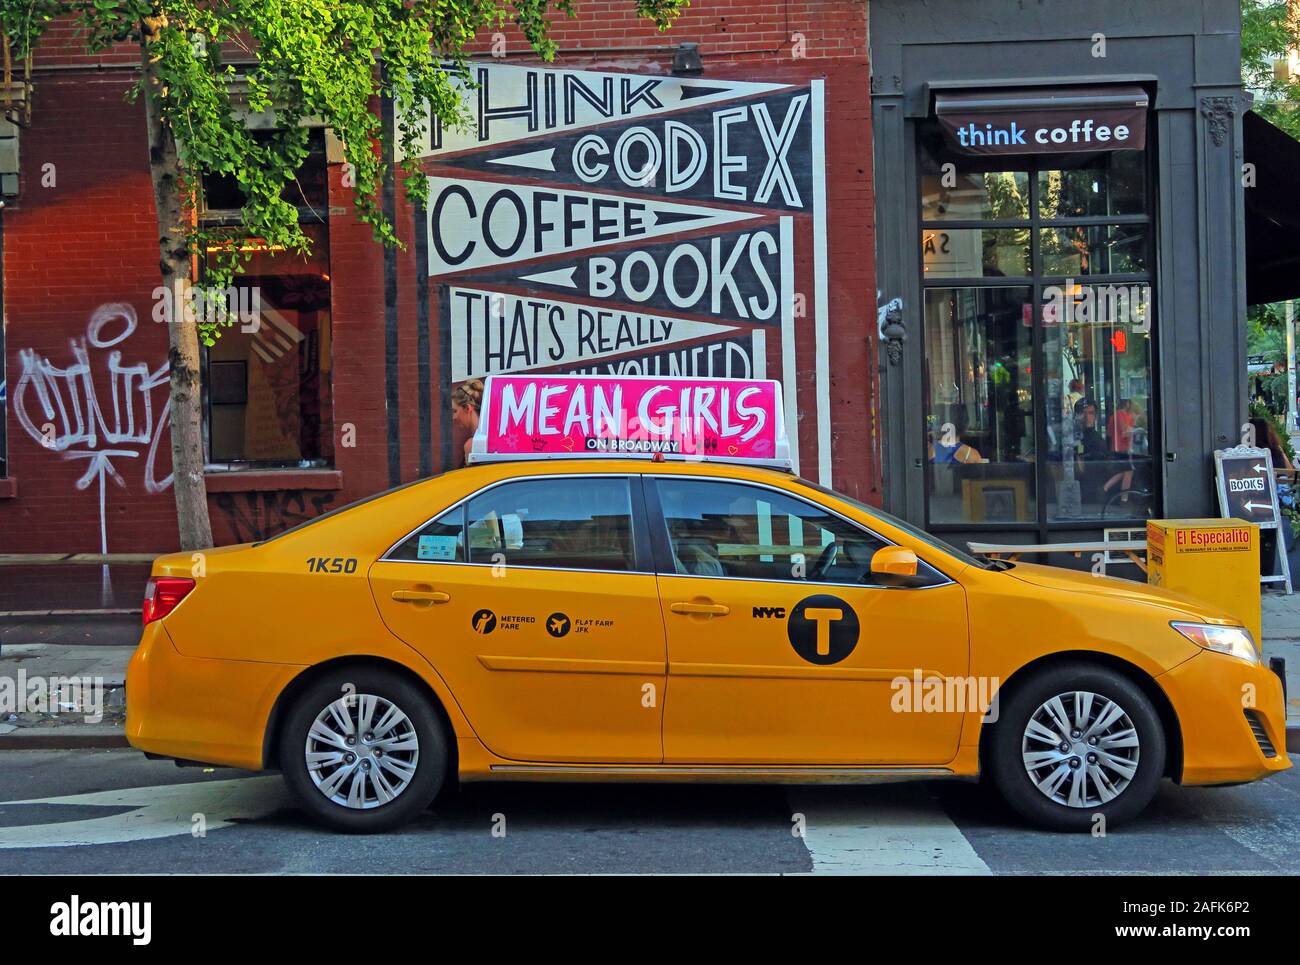 NYC Yellow Cab, 1K50, Think Coffee, Think, Codex, Kaffee, Bücher, Mean Girls, Taxifahrer, Manhattan, New York, New York City, NY, Bundesstaat, USA, USA Stockfoto